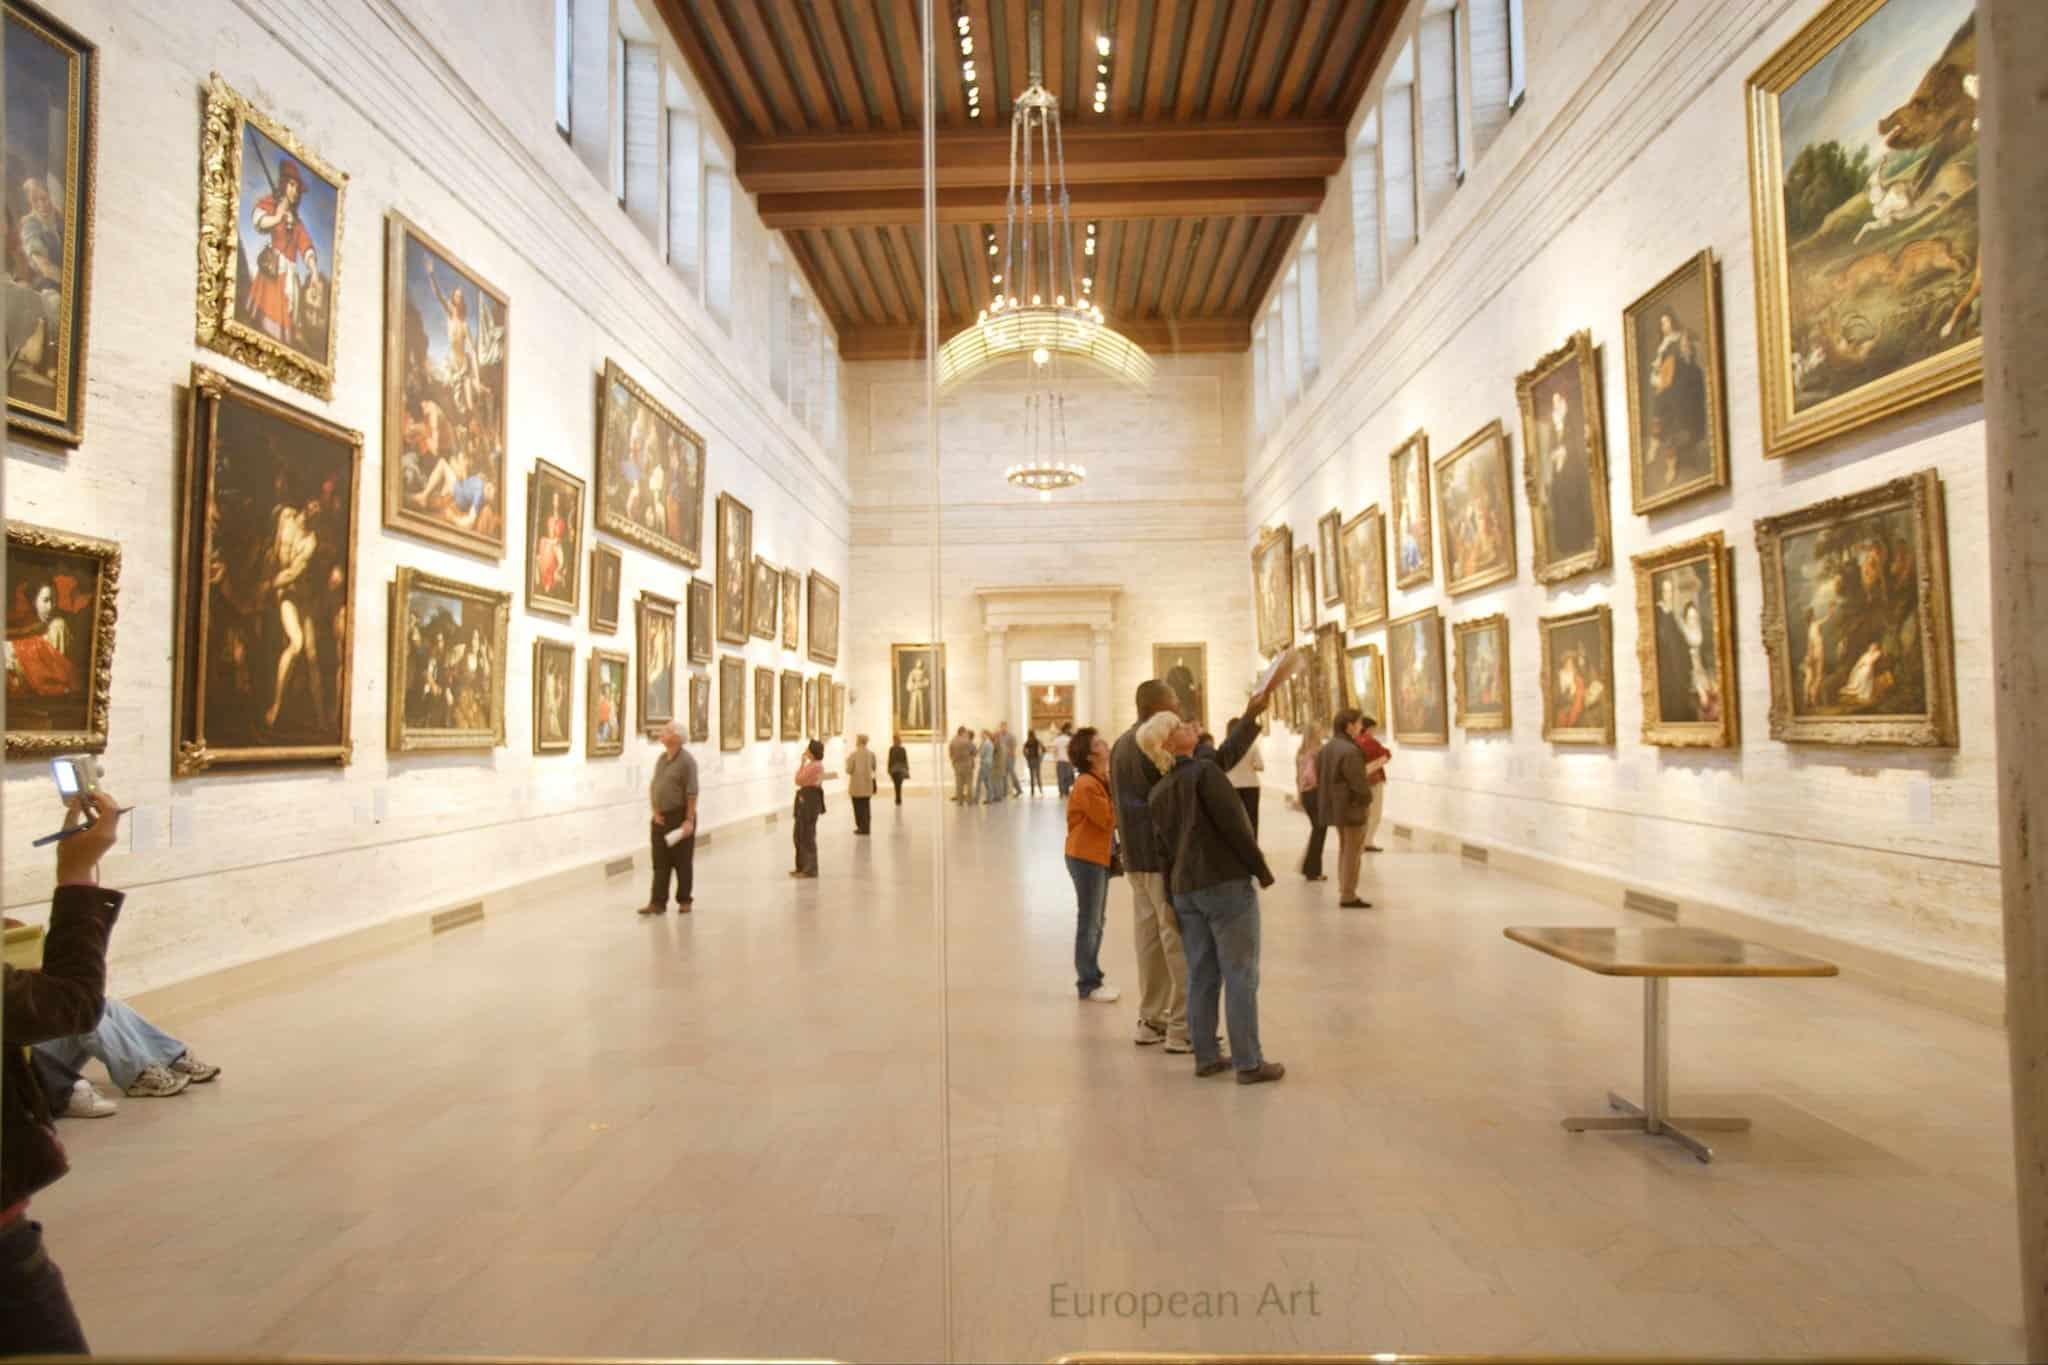 Gallery in the Museum of Fine Arts in Boston